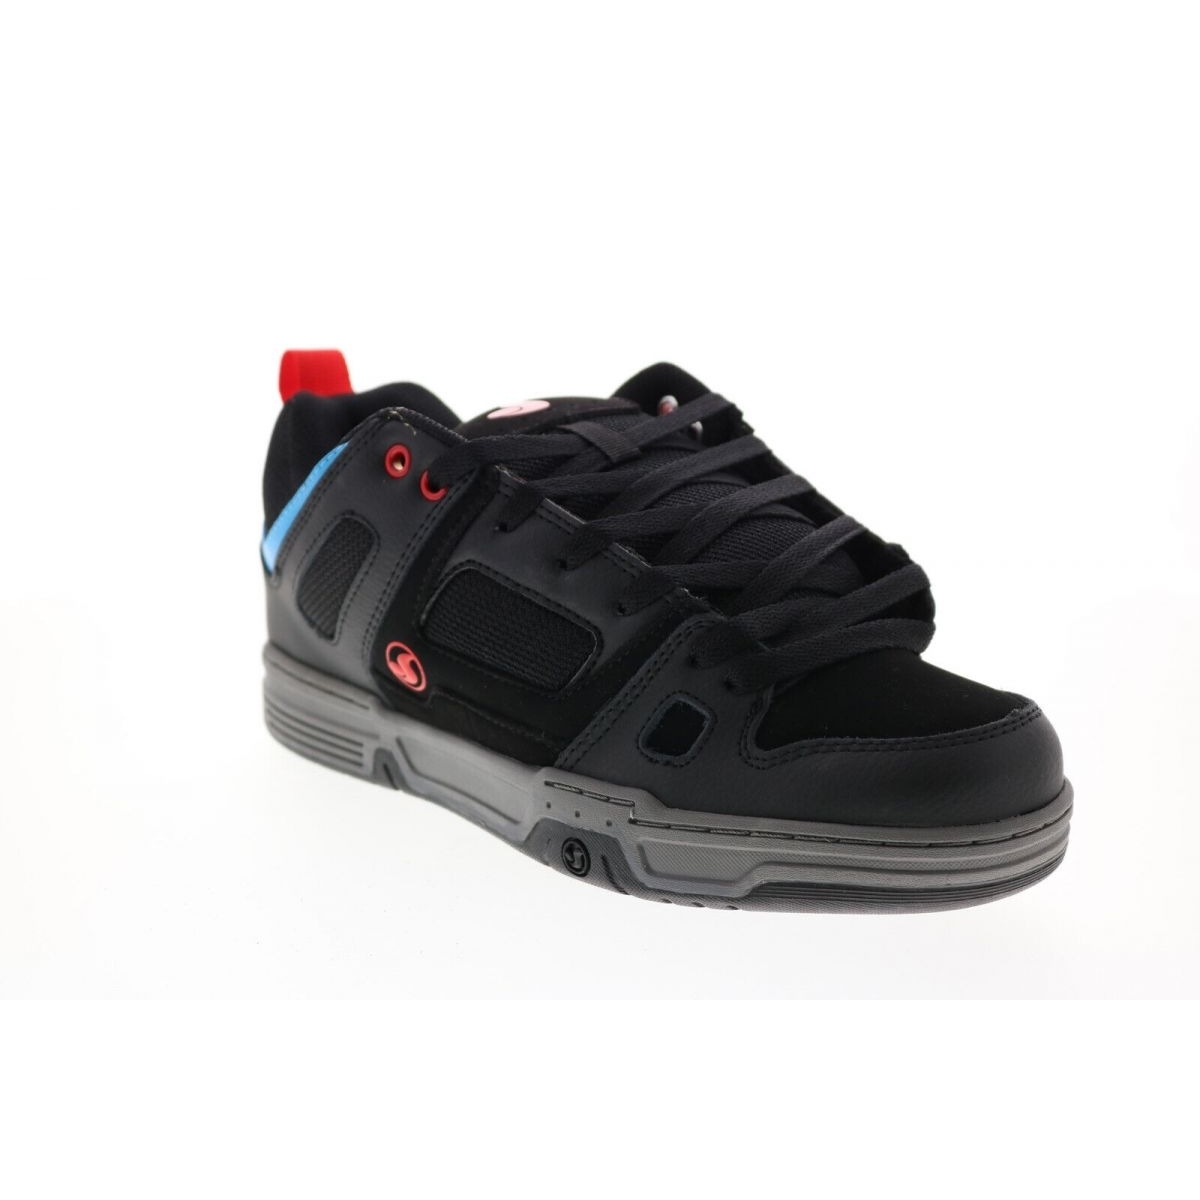 DVS Men's Gambol Skate Shoe 0 BLACK FIERY RED BLUE NUBUCK - BLACK FIERY RED BLUE NUBUCK, 12